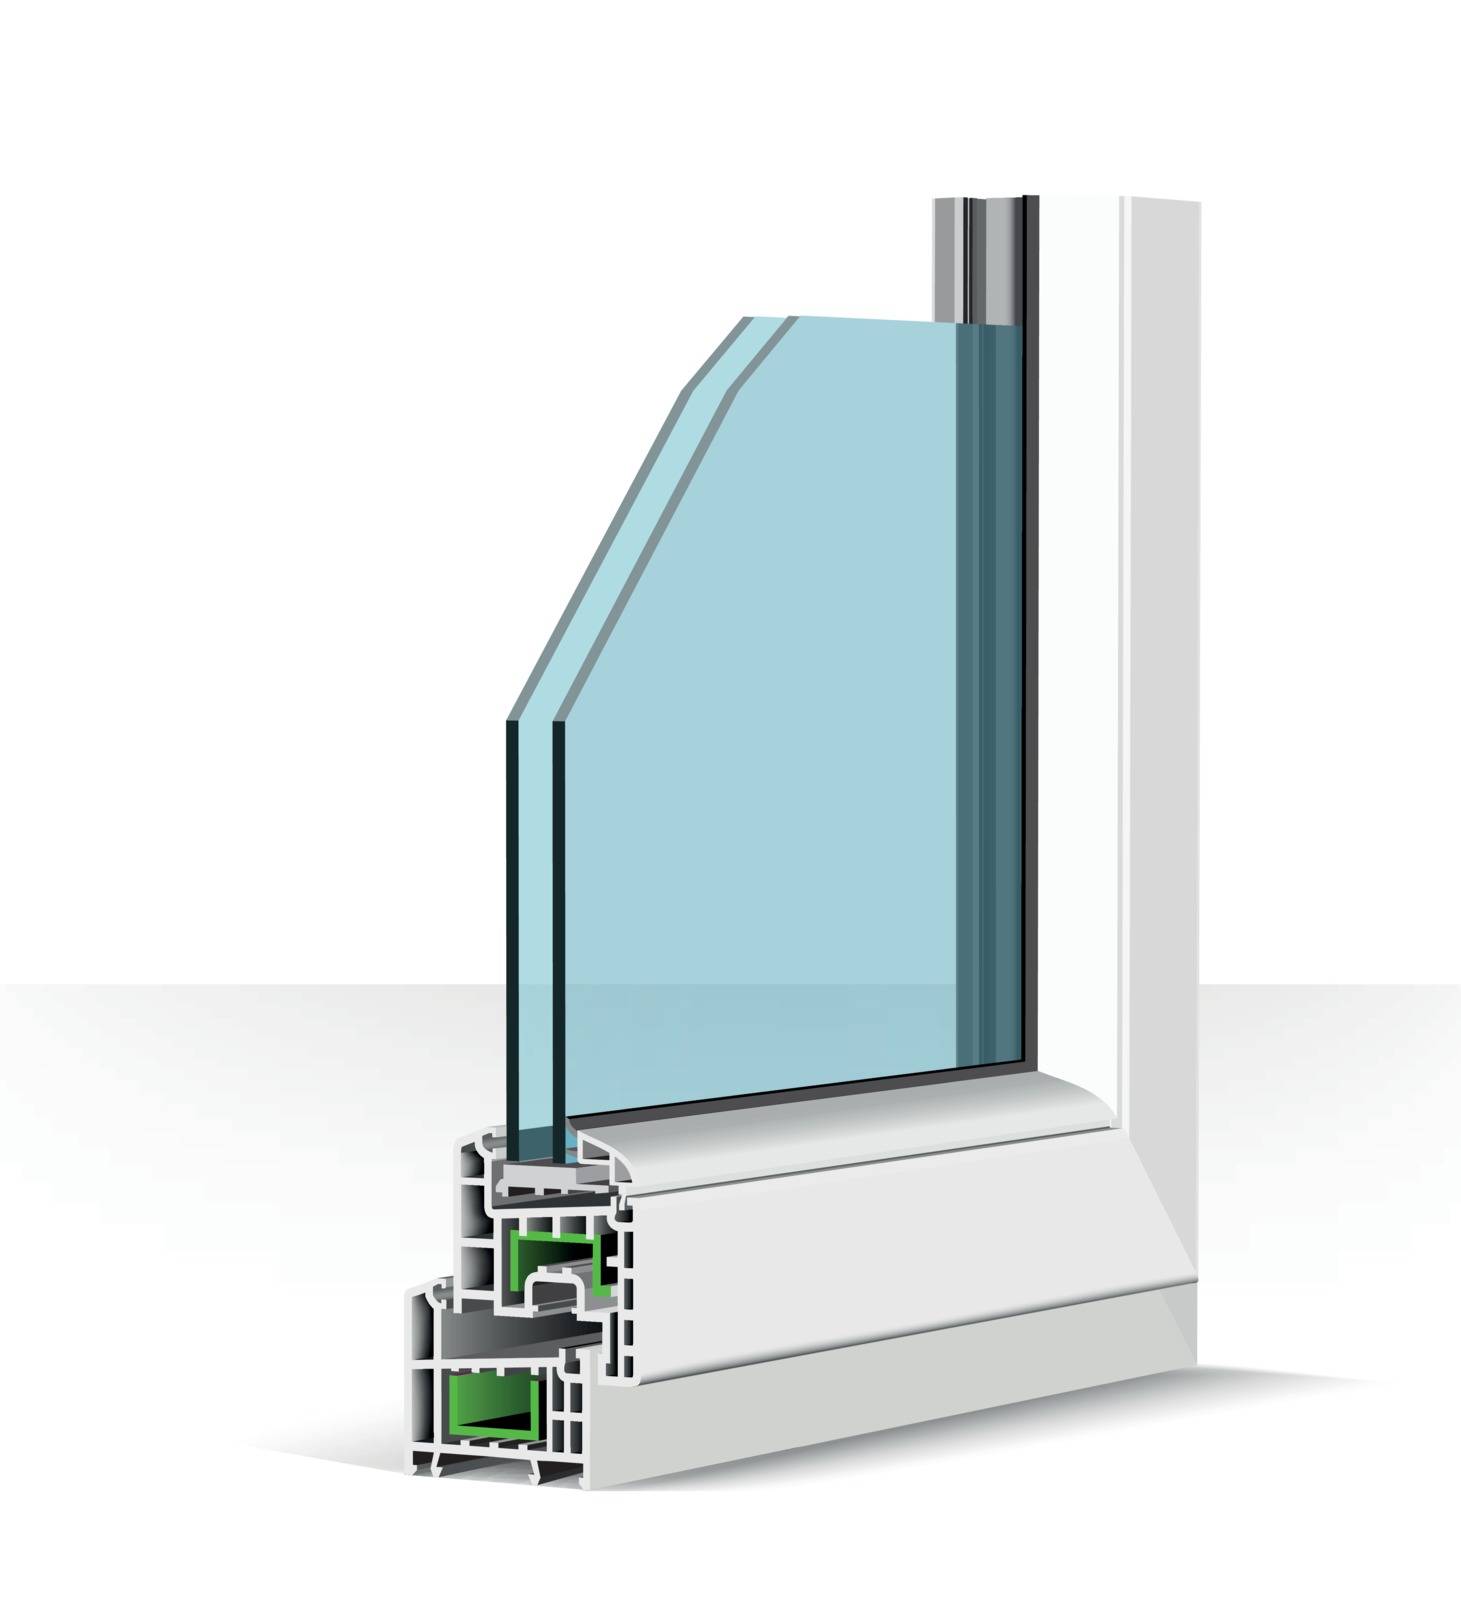 3d plastic window profile. Vector illustration on white background